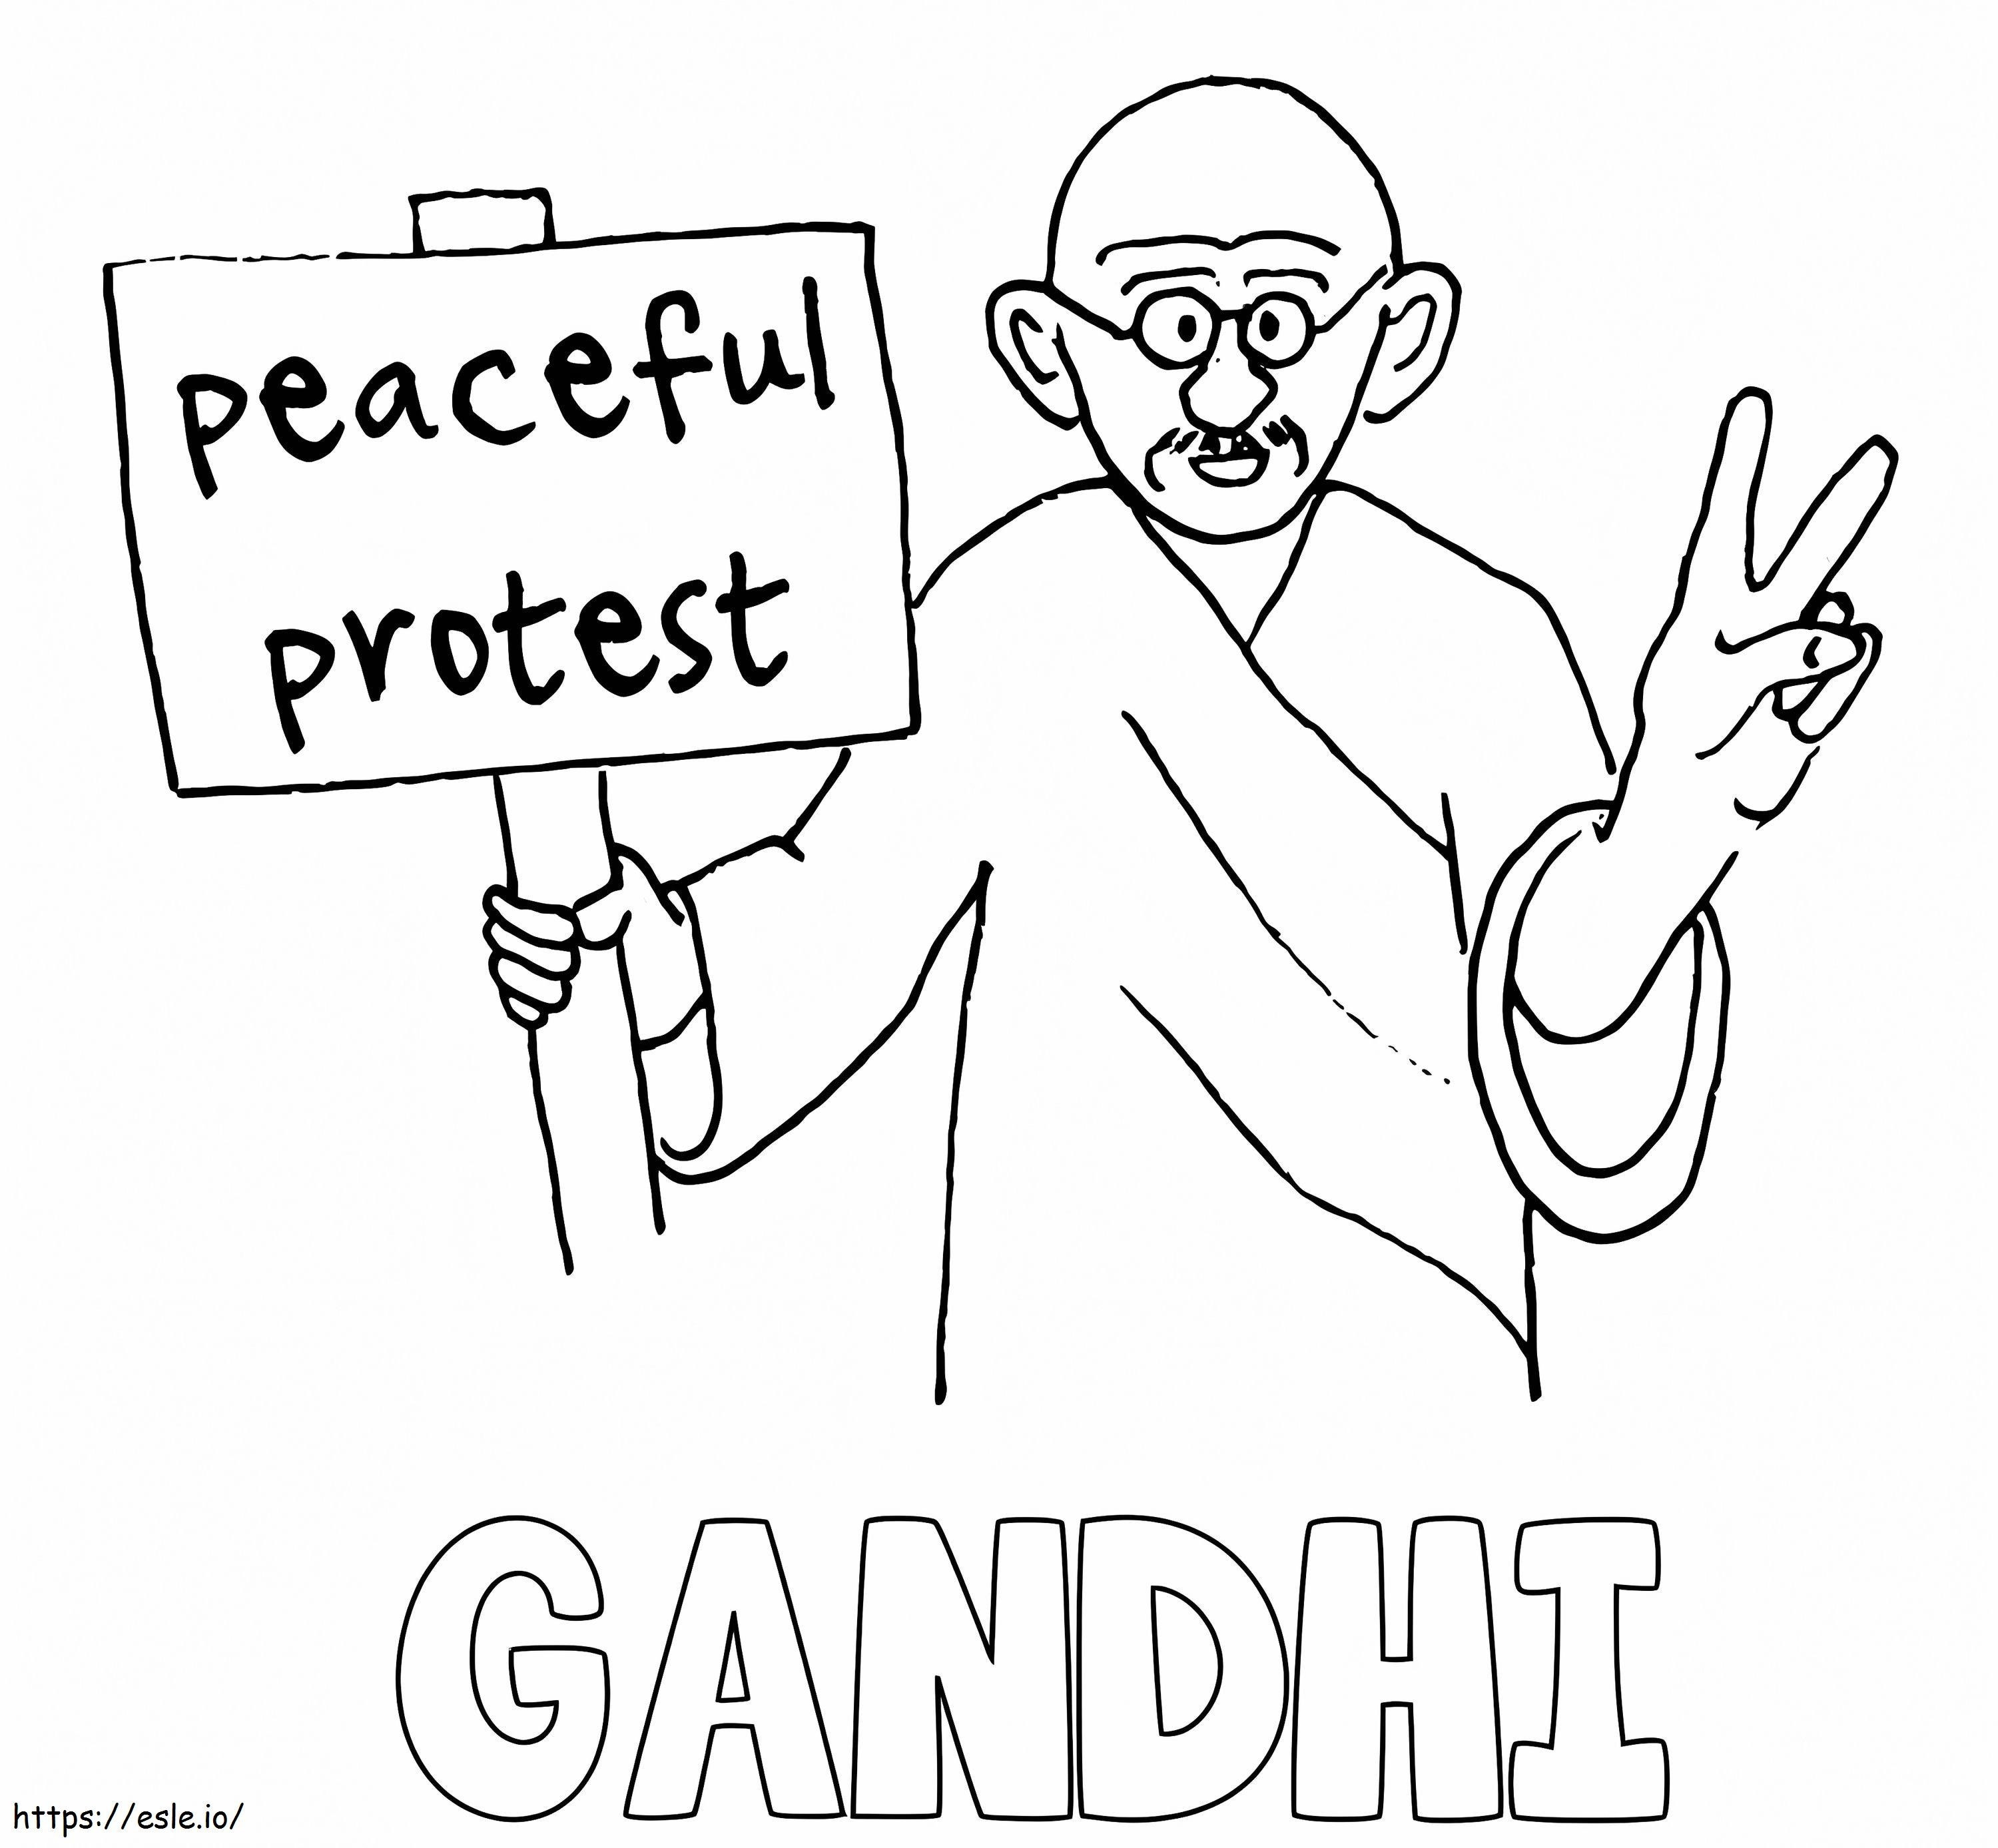 Mahatma Gandhi 7 ausmalbilder